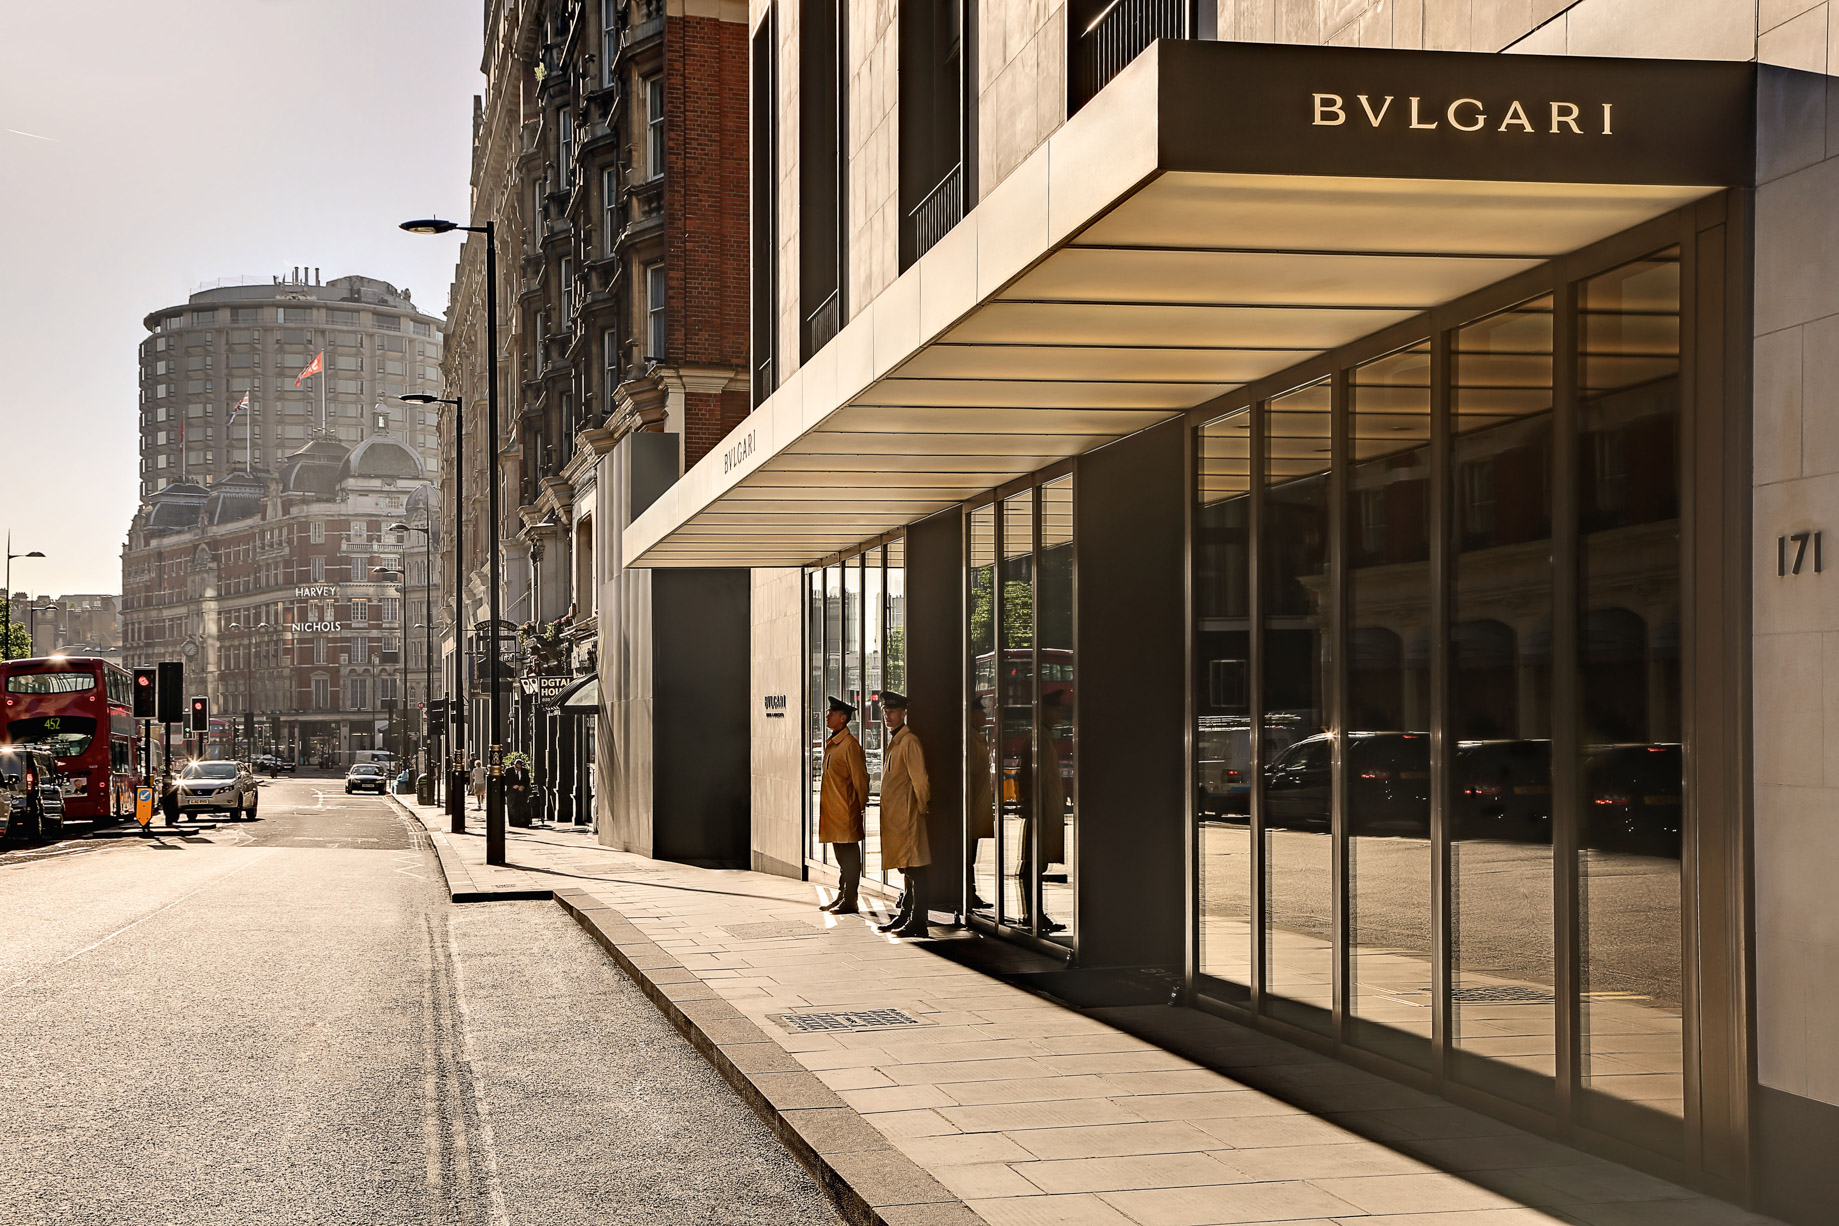 Bvlgari Hotel London – Knightsbridge, London, UK – Hotel Front Entrance